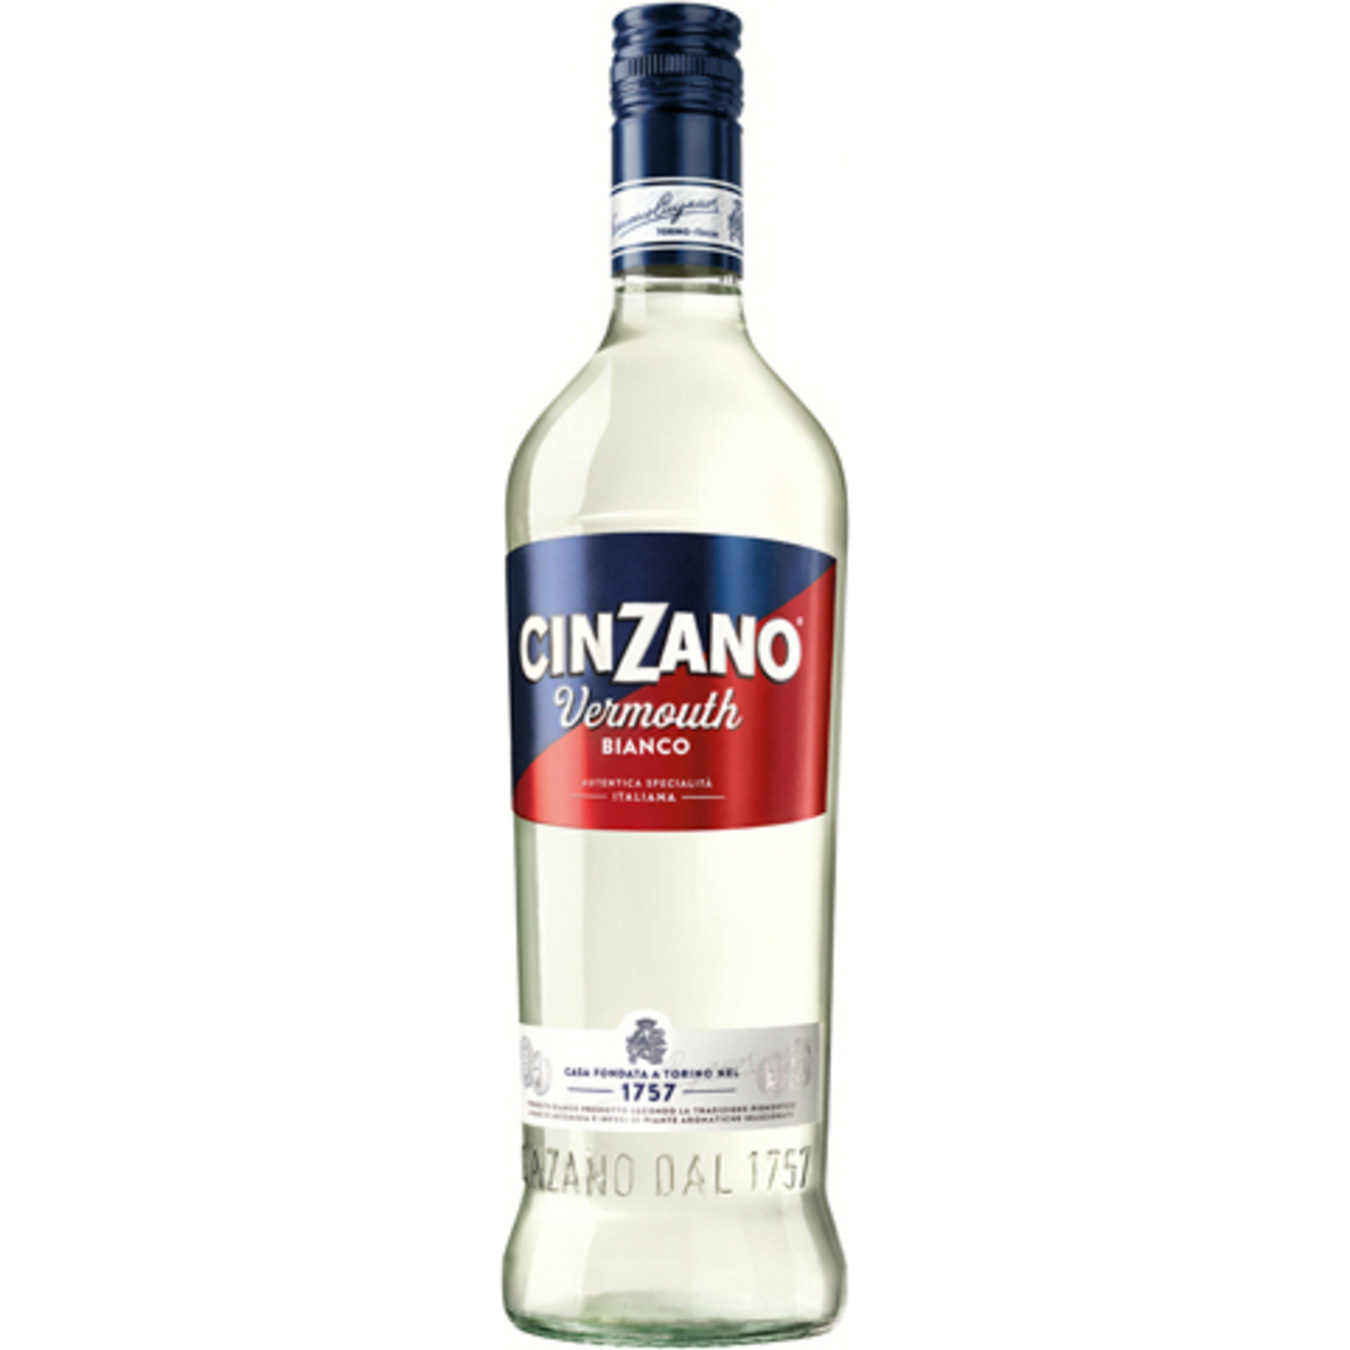 Cinzano Bianco Vermouth 15% 1l